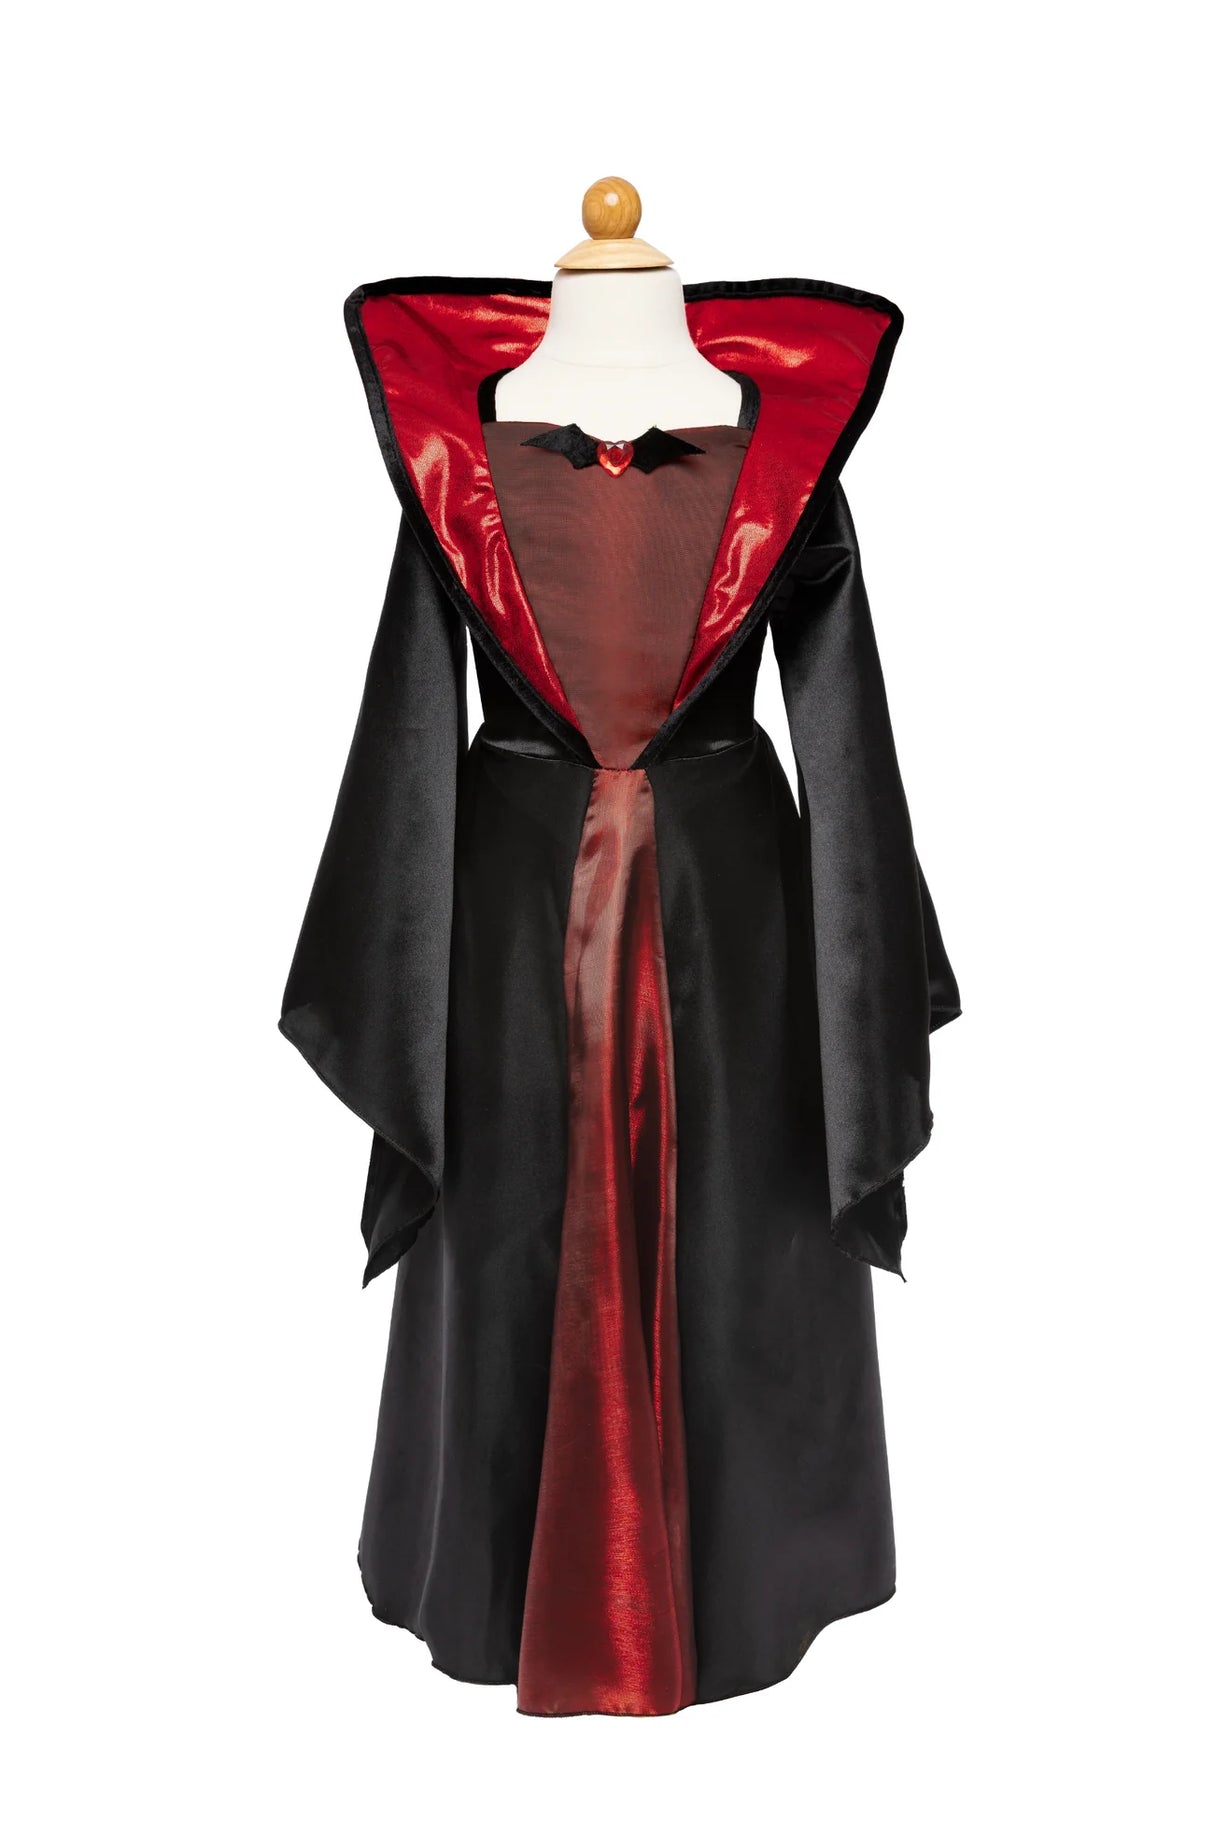 Vampire Dress | Size 5-6